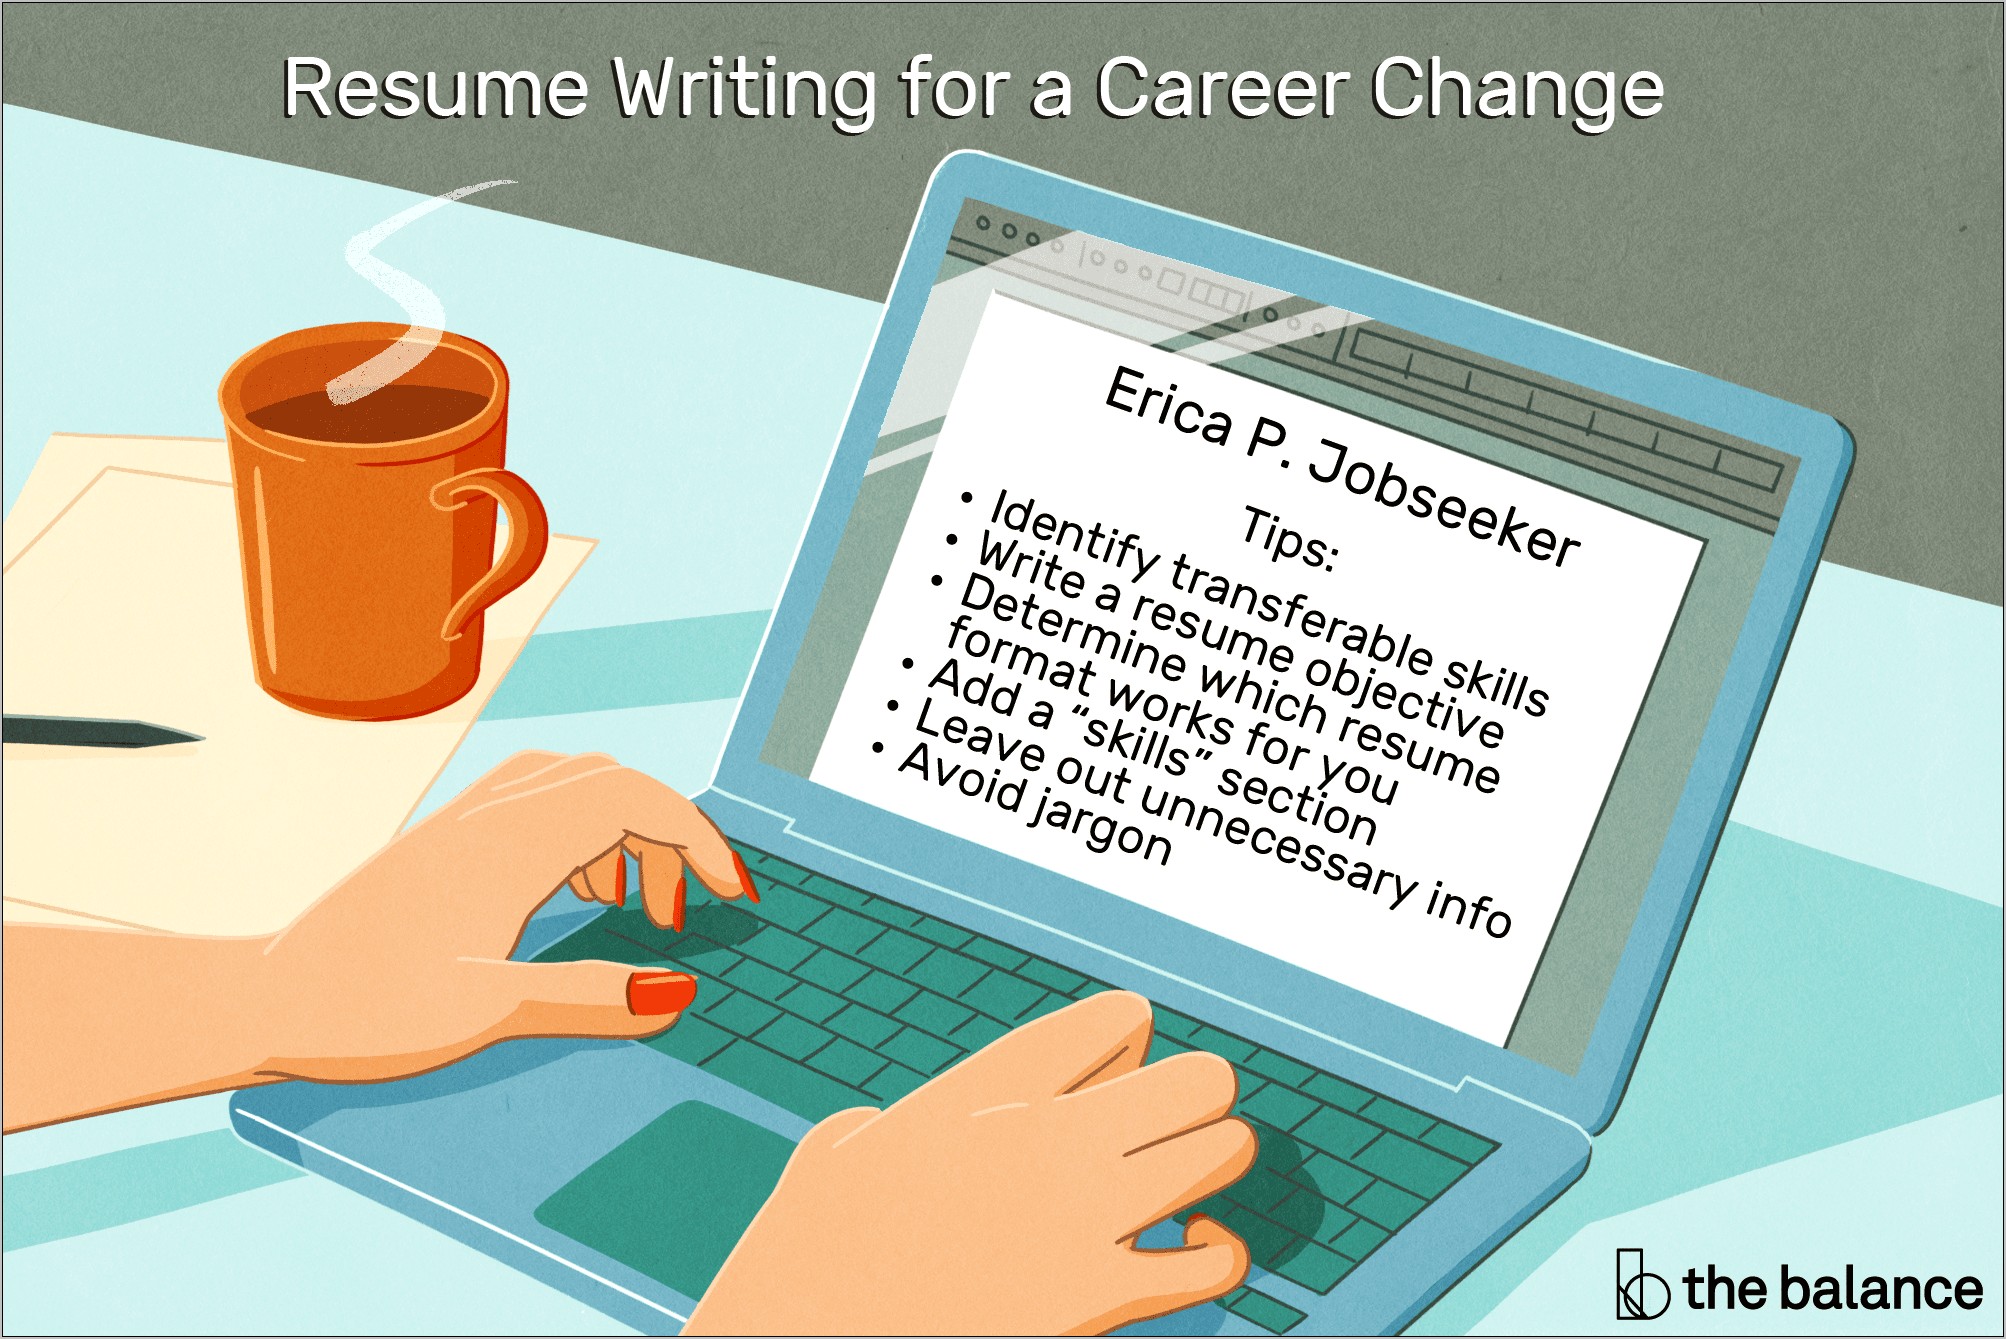 Sample Objectives For Career Change Resumes